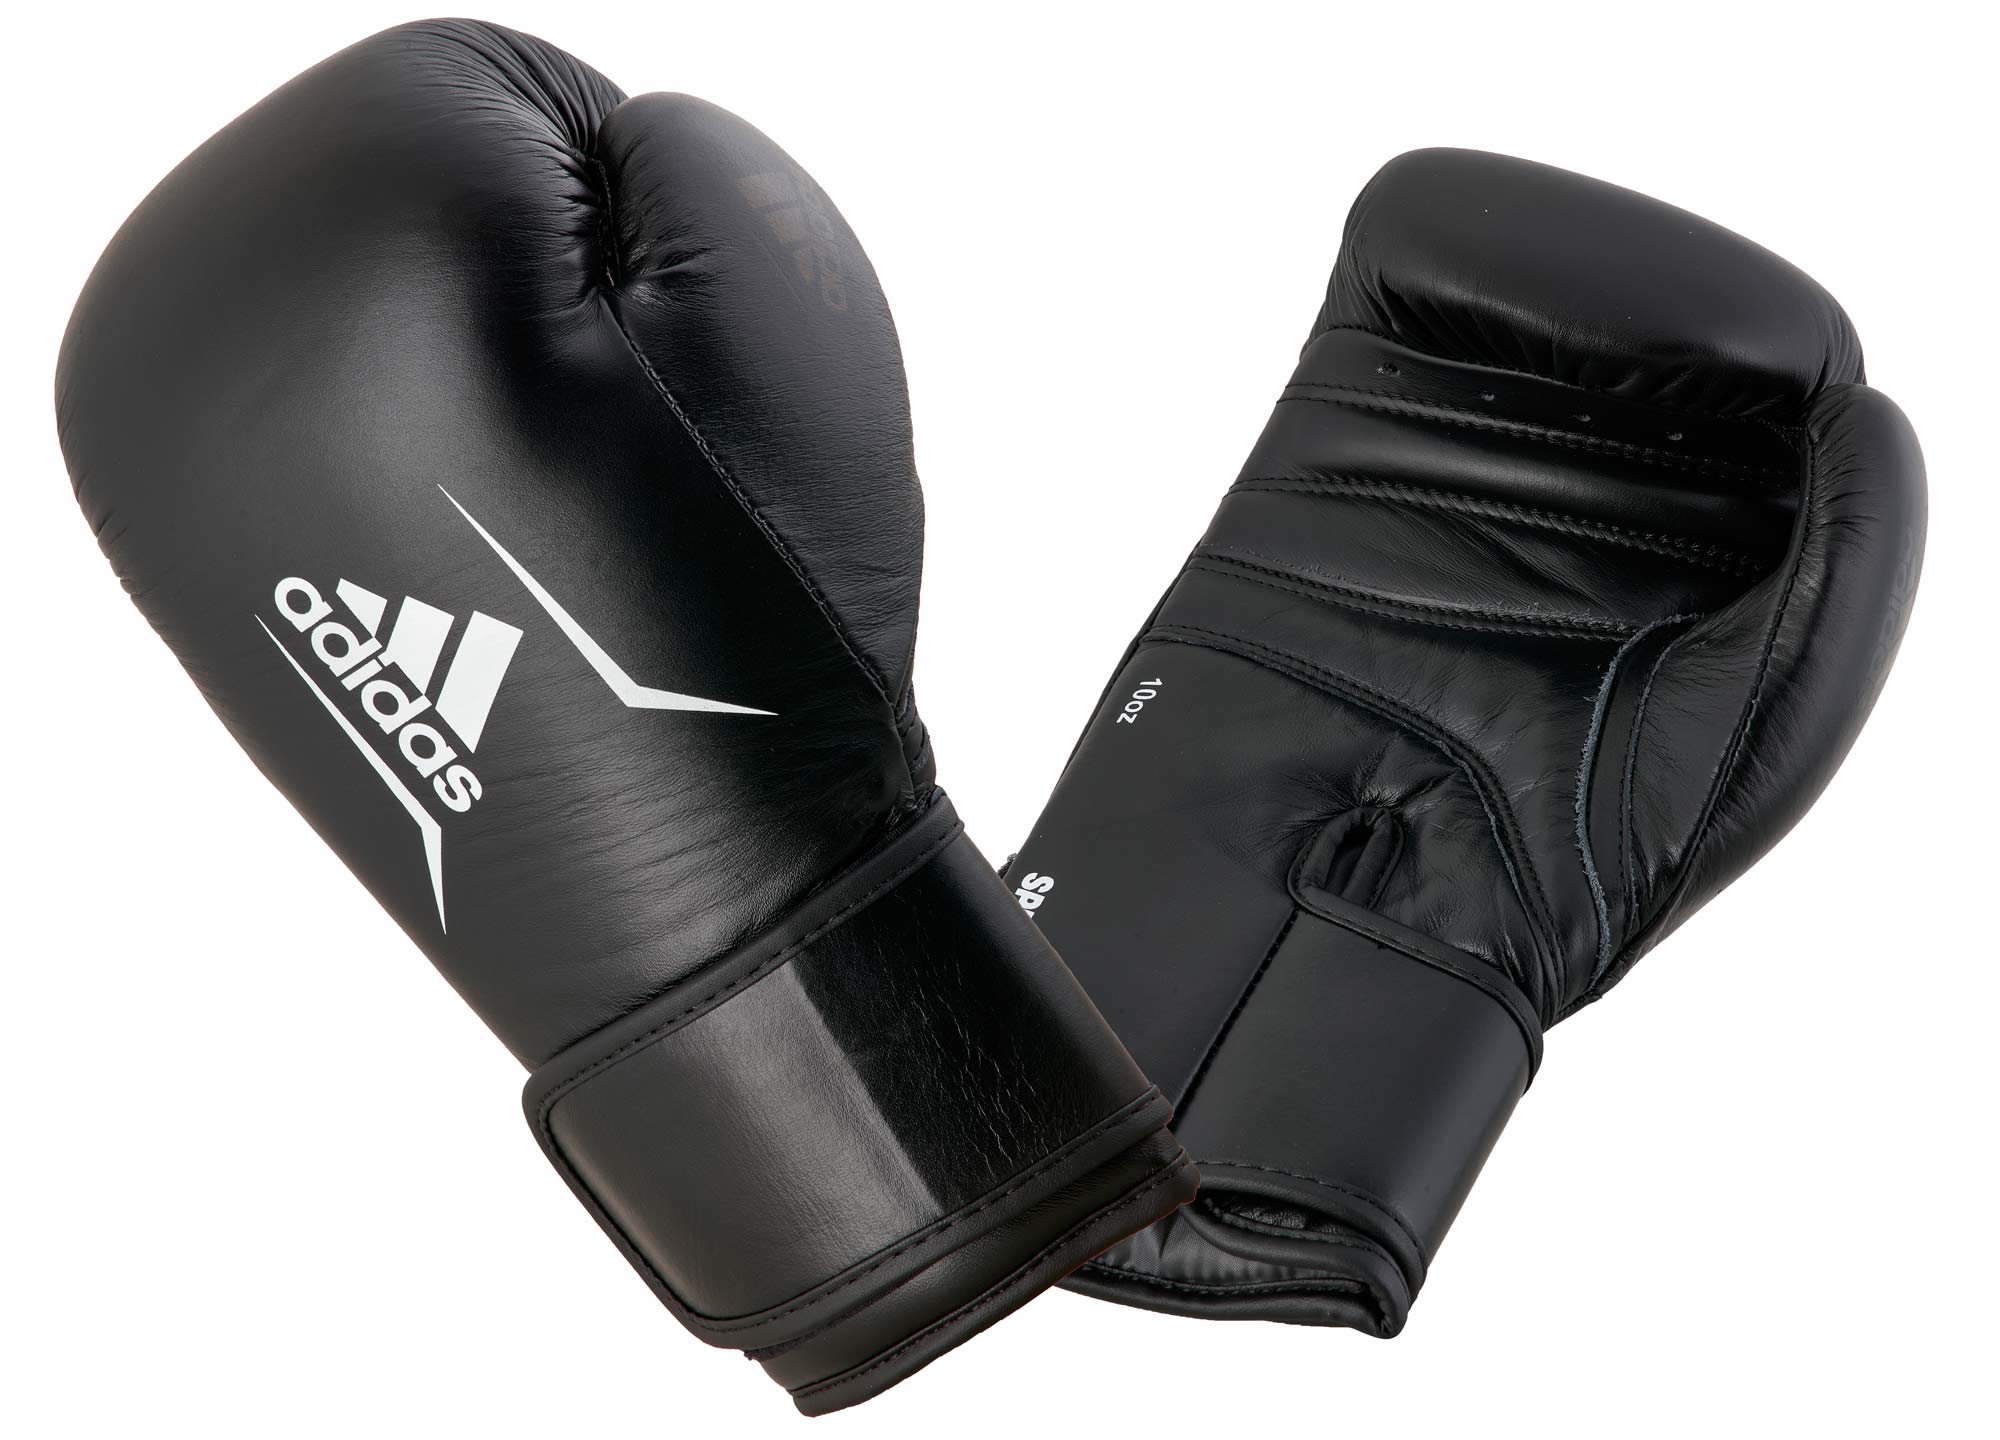  adidas boxing glove Speed 175 adiSBG175 2.0, black/white